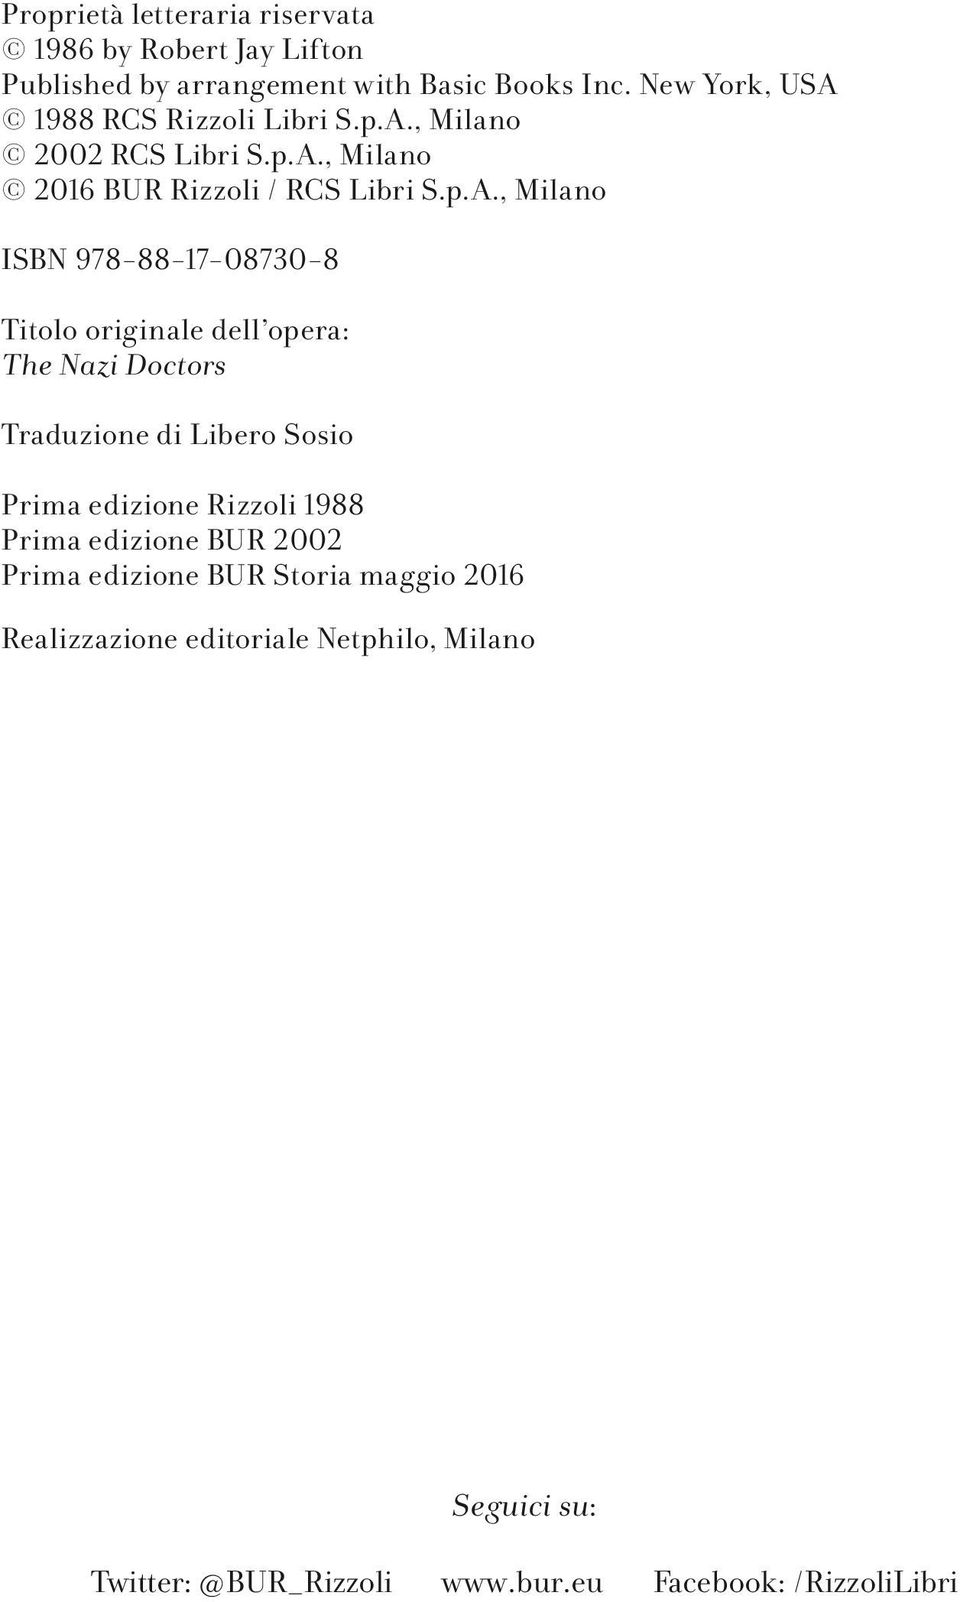 1988 RCS Rizzoli Libri S.p.A.